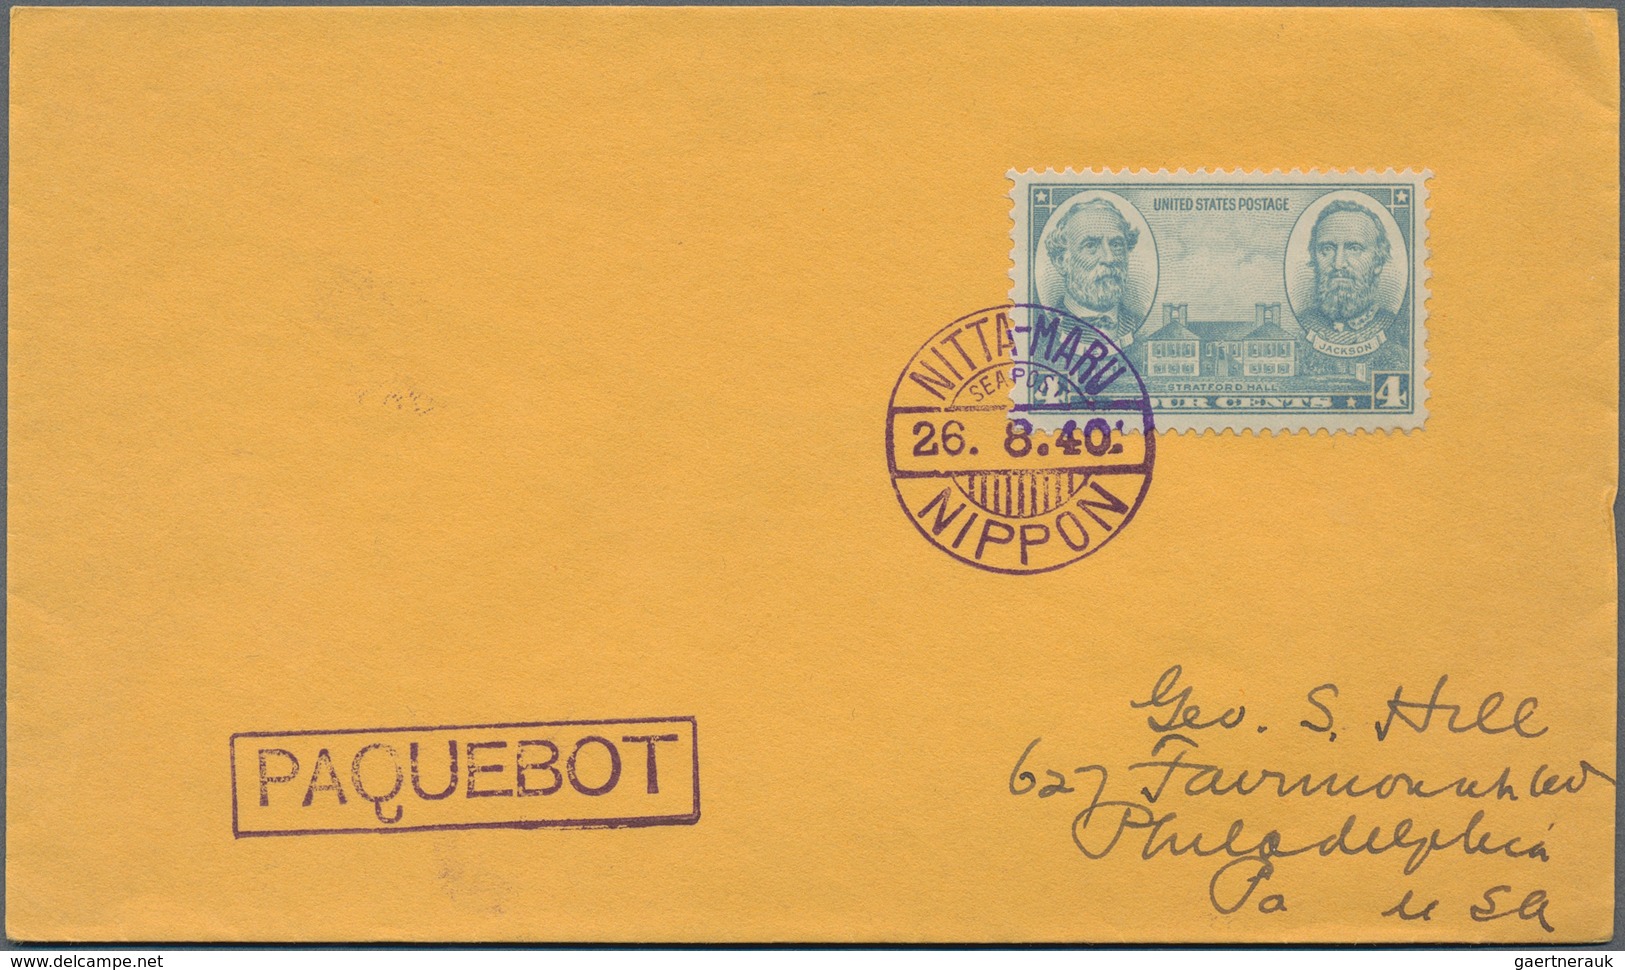 Japan: 1930/41, NYK-paquebot mail to USA inc. Kamakura-, Tatsuta- (2), Heian- (2), Asama- (2), Nitta